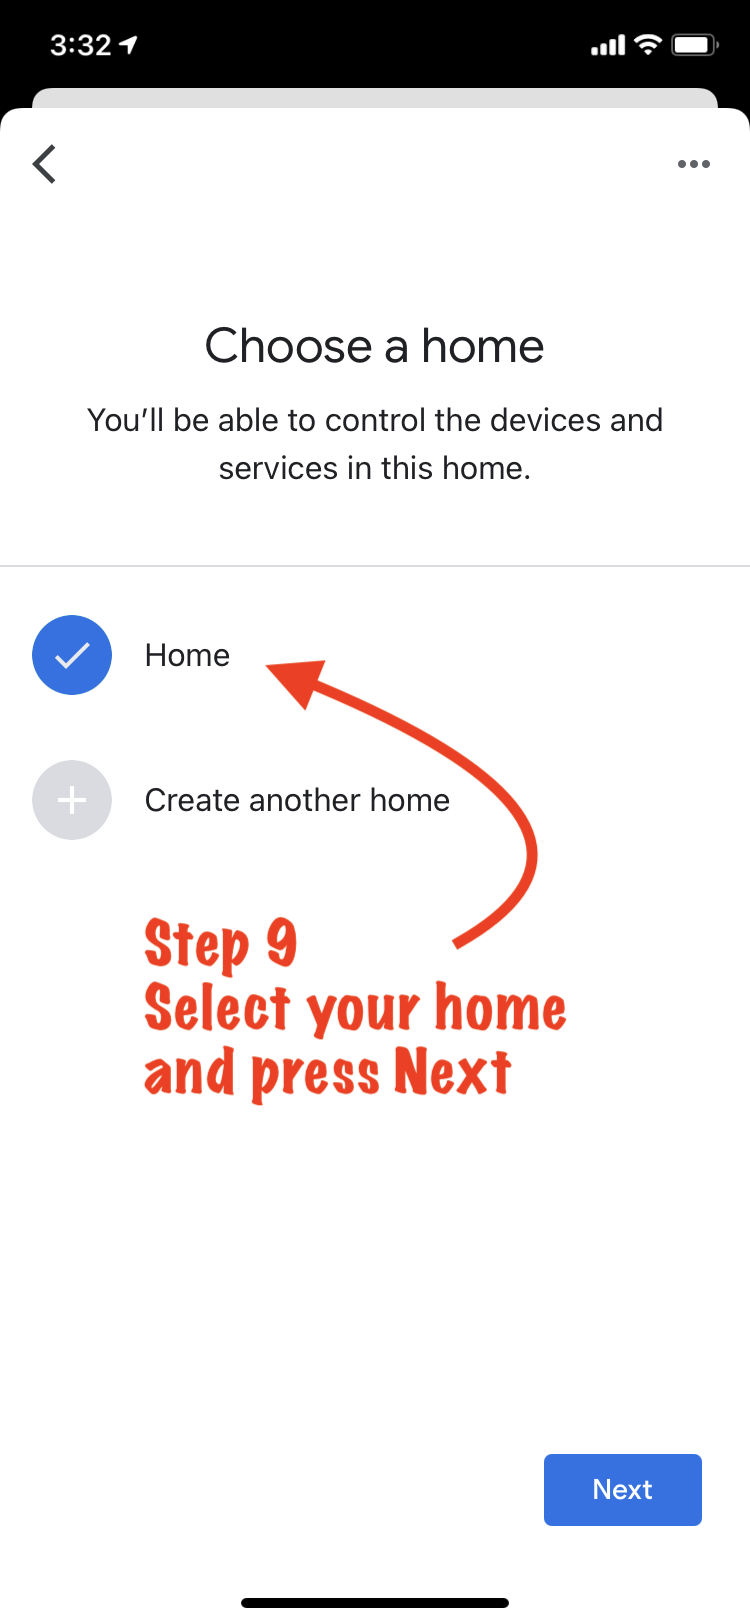 Screenshot of "Choose a home" in Google Home app